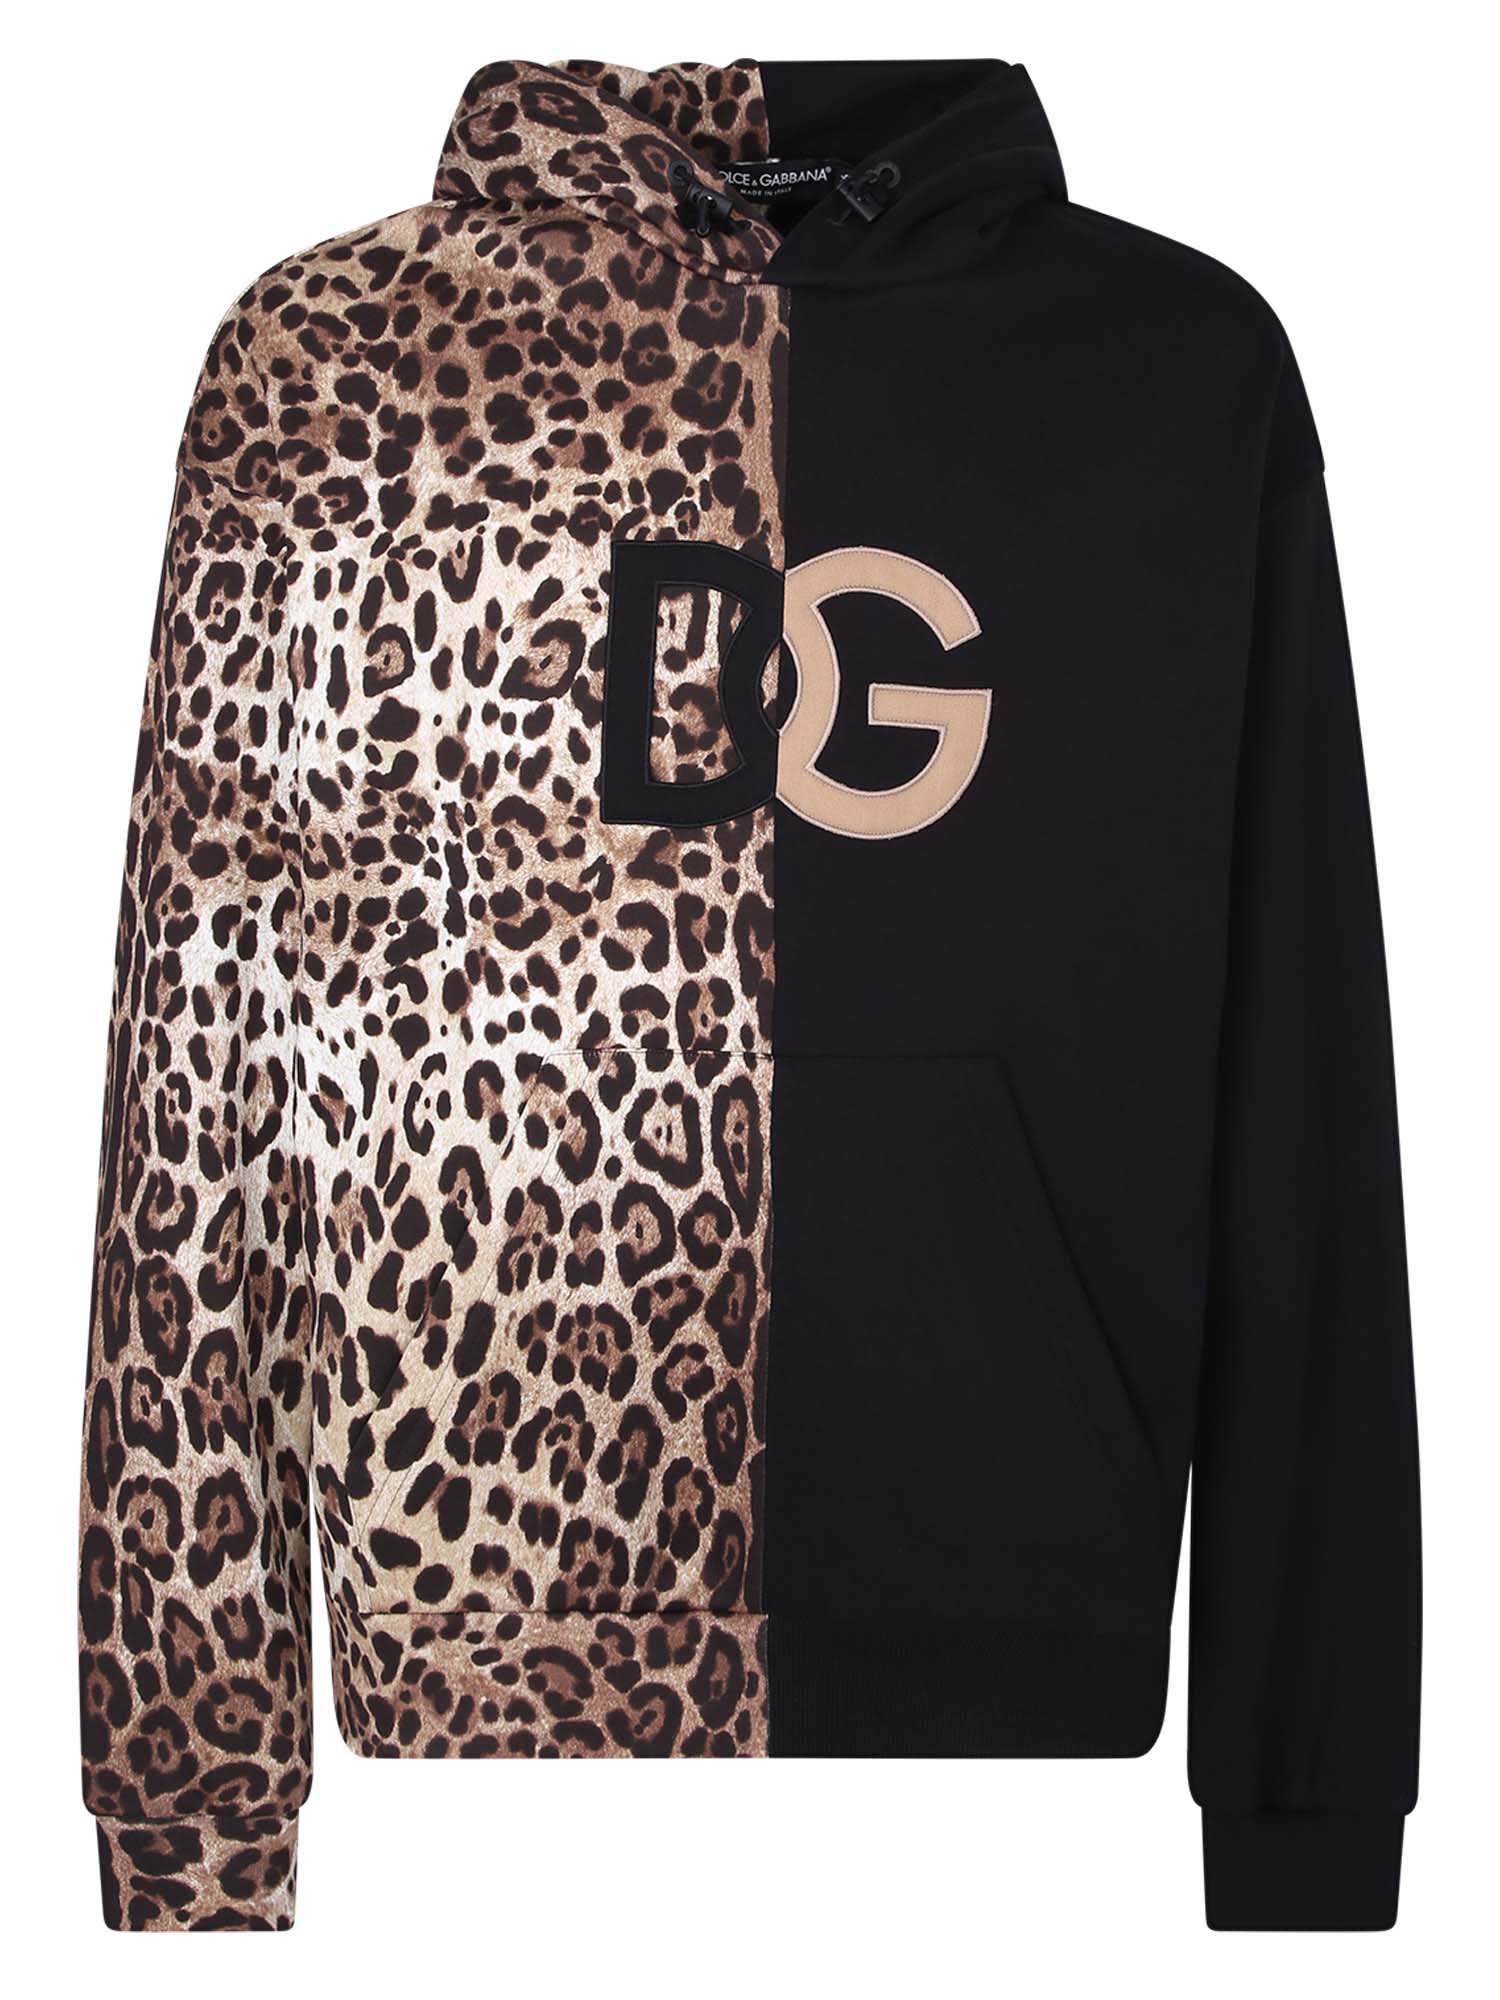 Dolce & Gabbana Leopard Print Sweatshirt